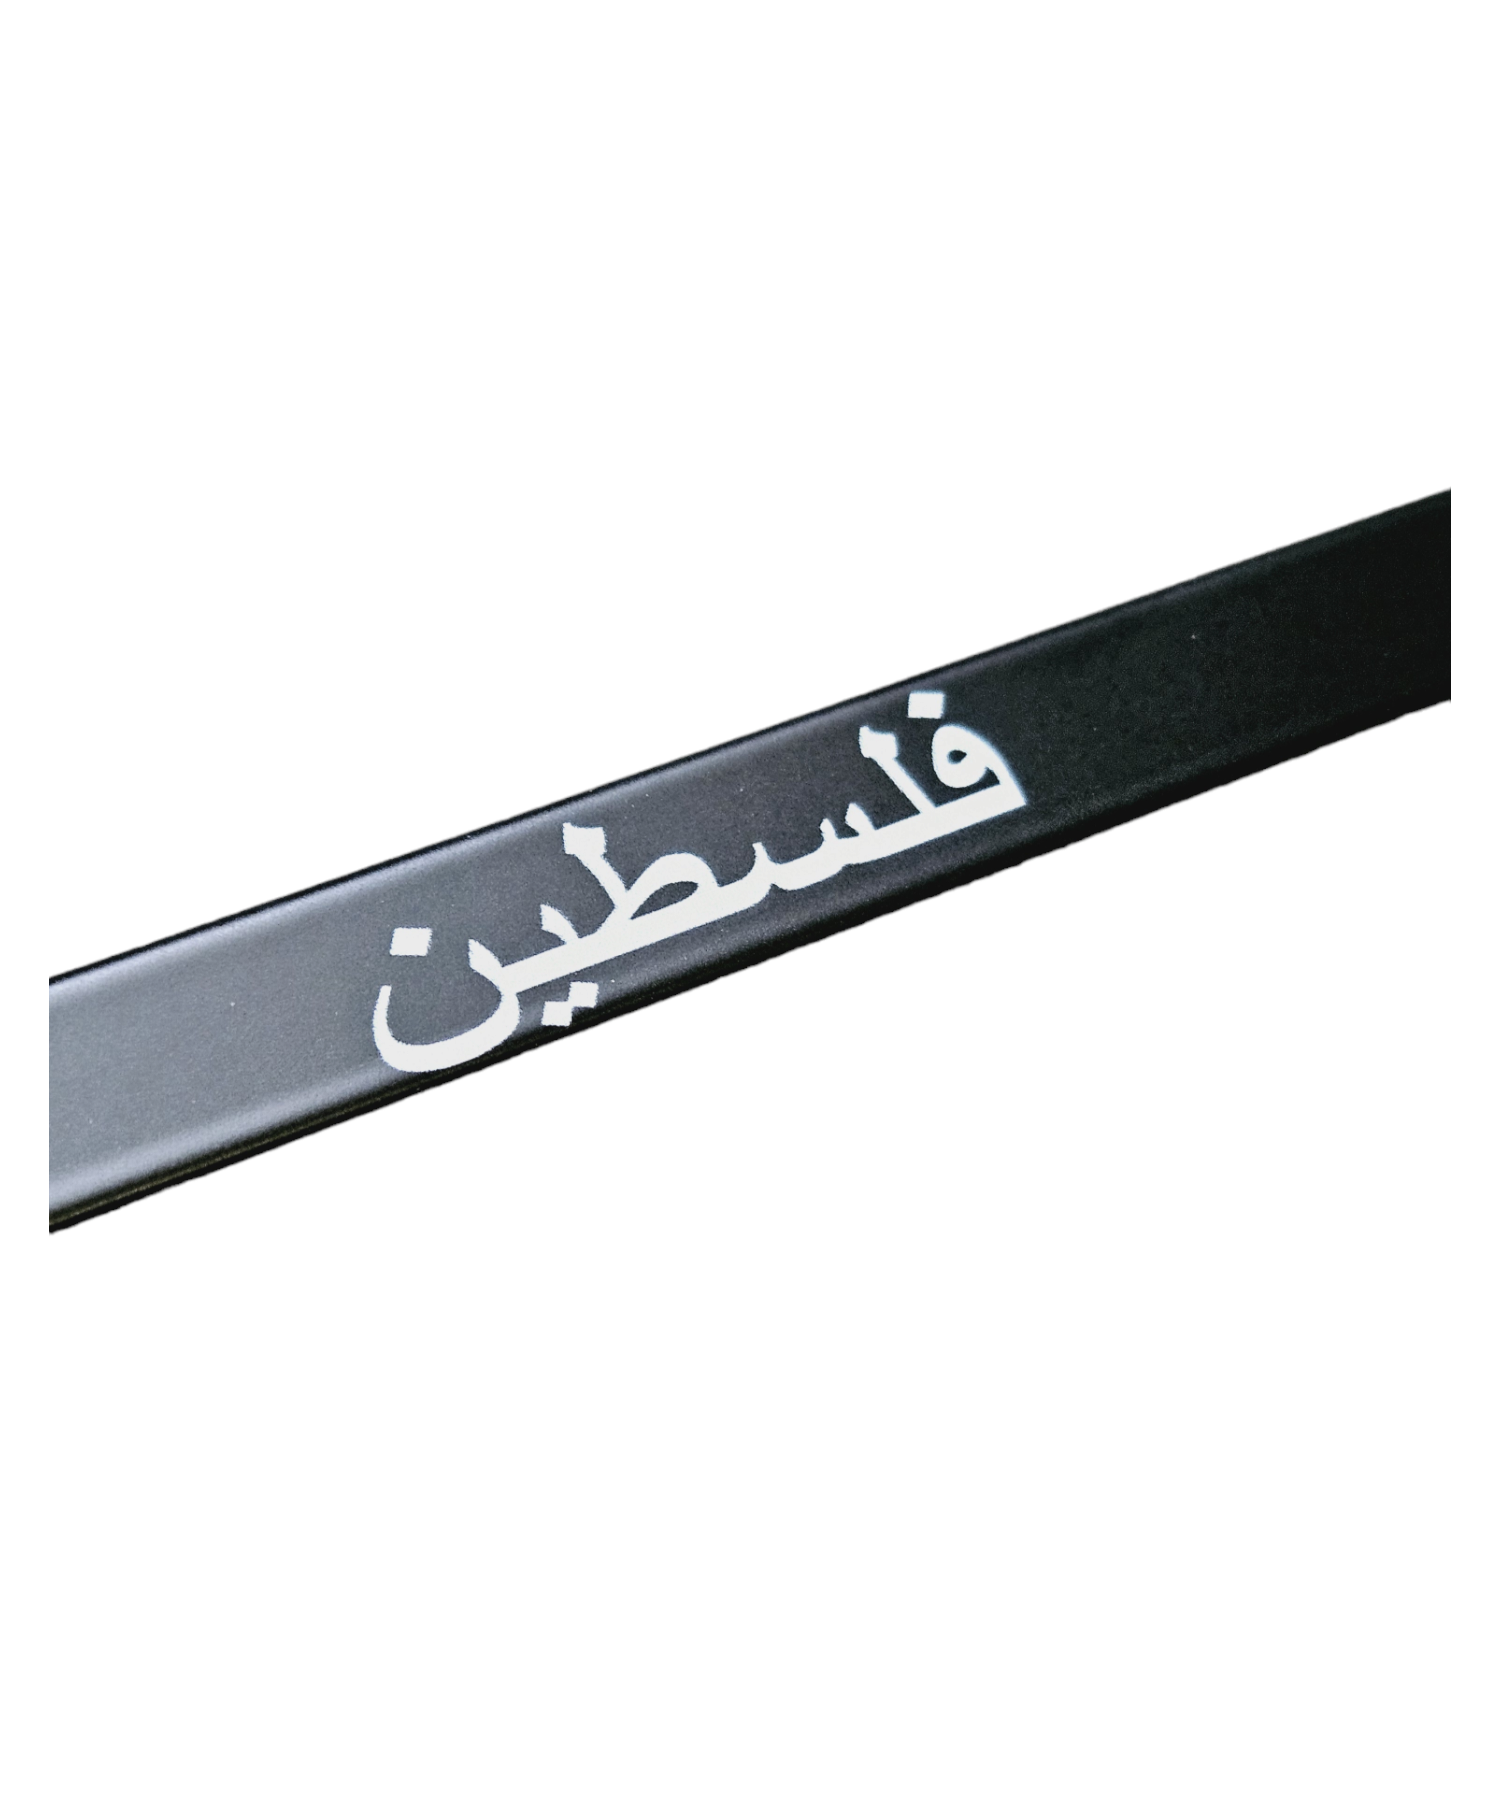 Palestine License Plate Frame Face Cover - Habibi Heritage